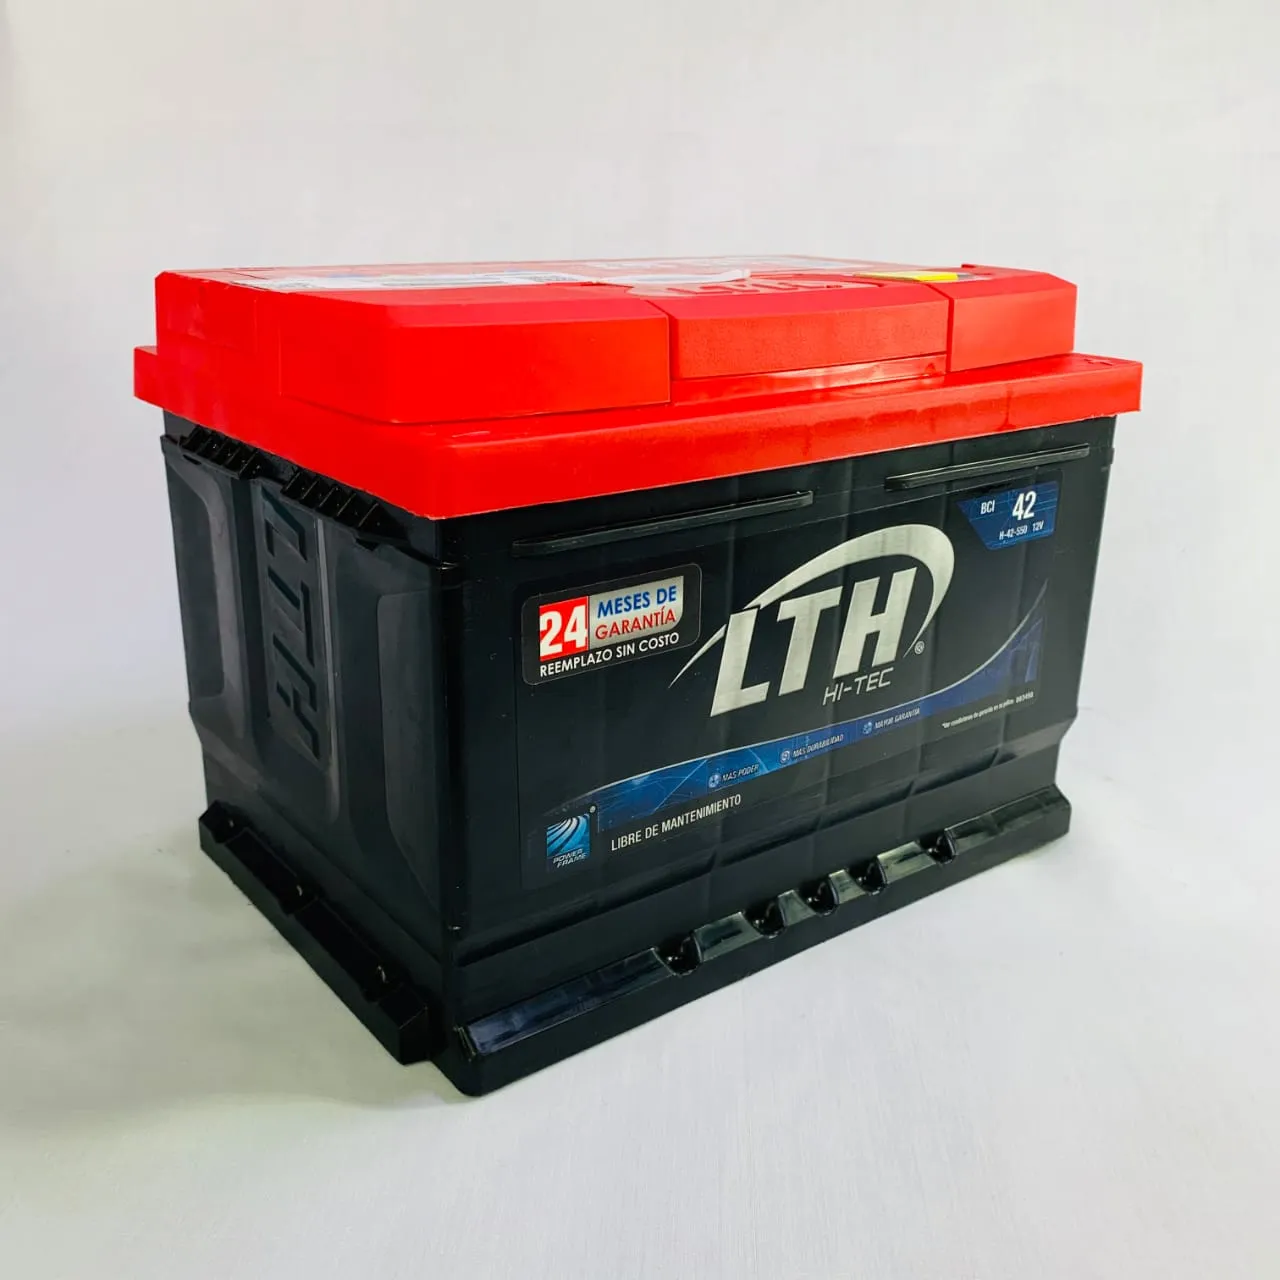 Baterias LTH HITEC Grupo N42R / N50 corte bajo